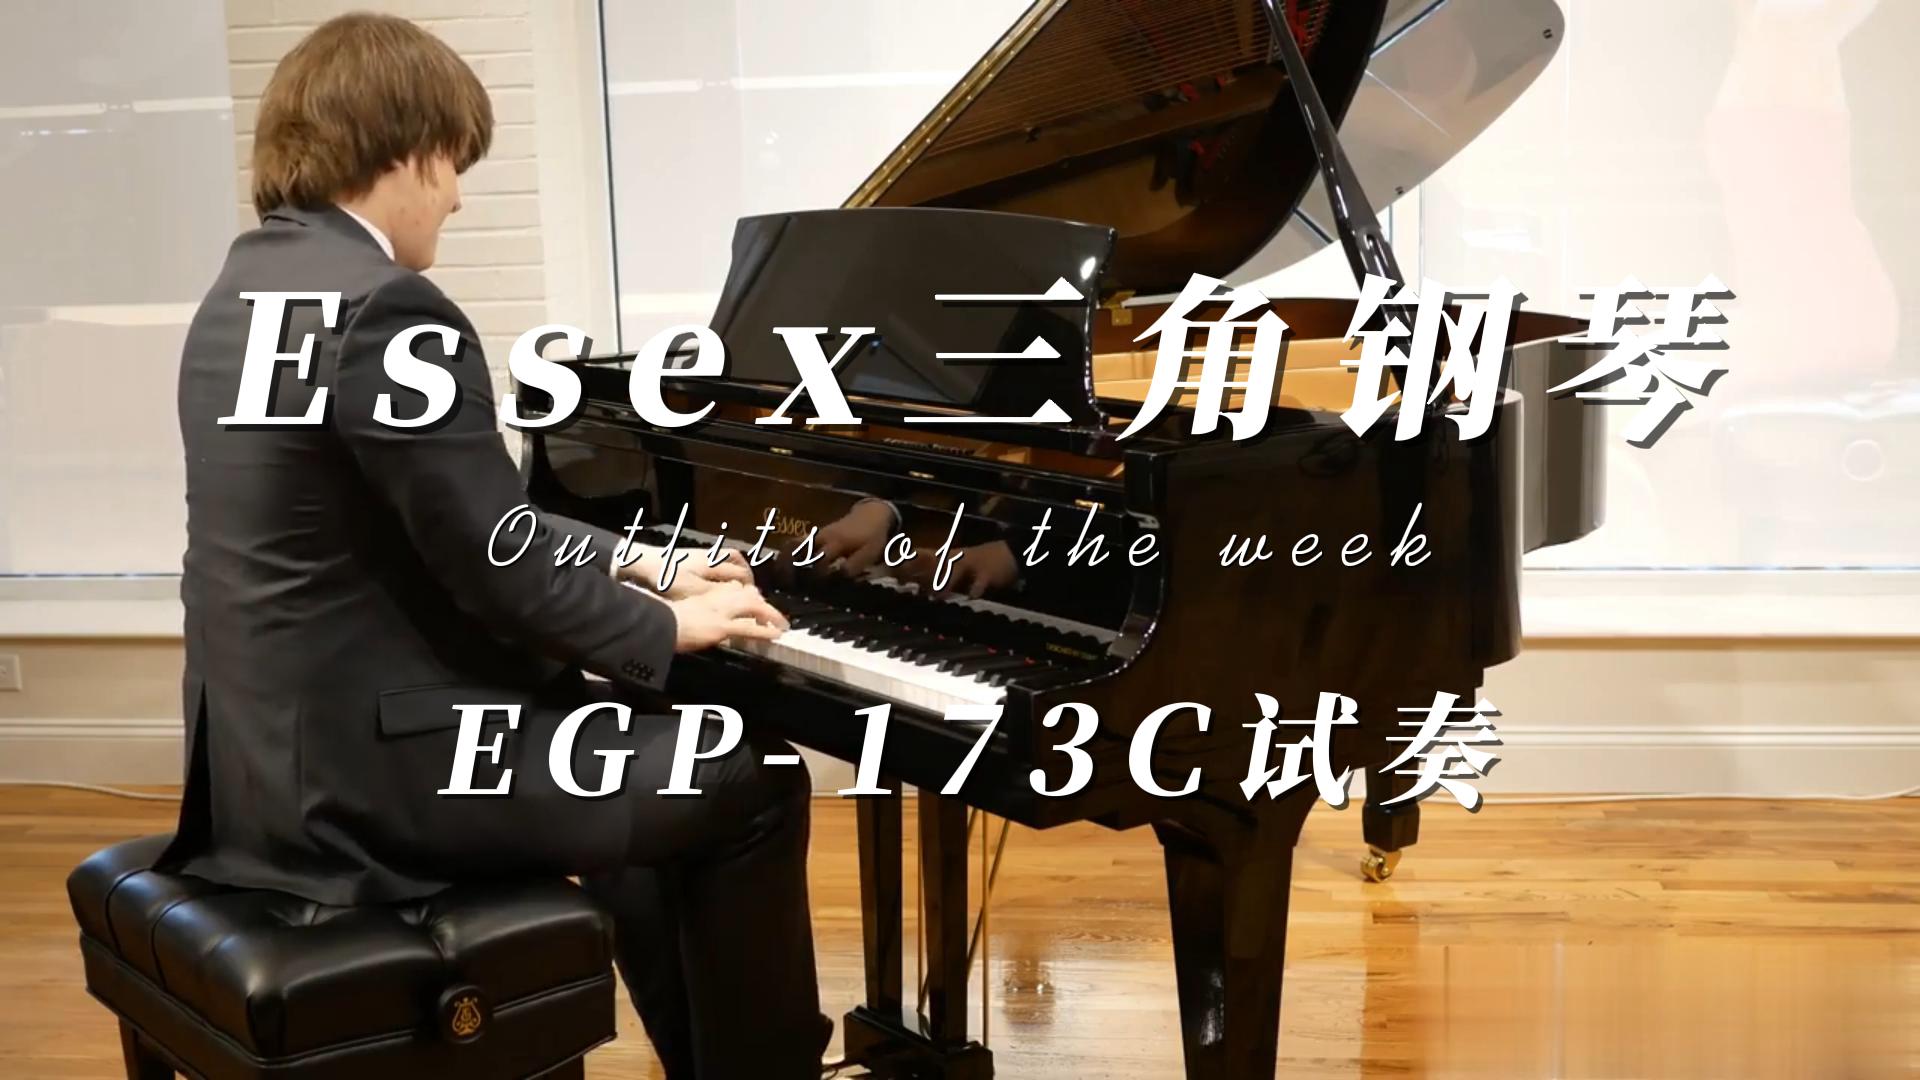 Essex（艾塞克斯钢琴）三角钢琴EGP-173C试奏-柏通琴行整理